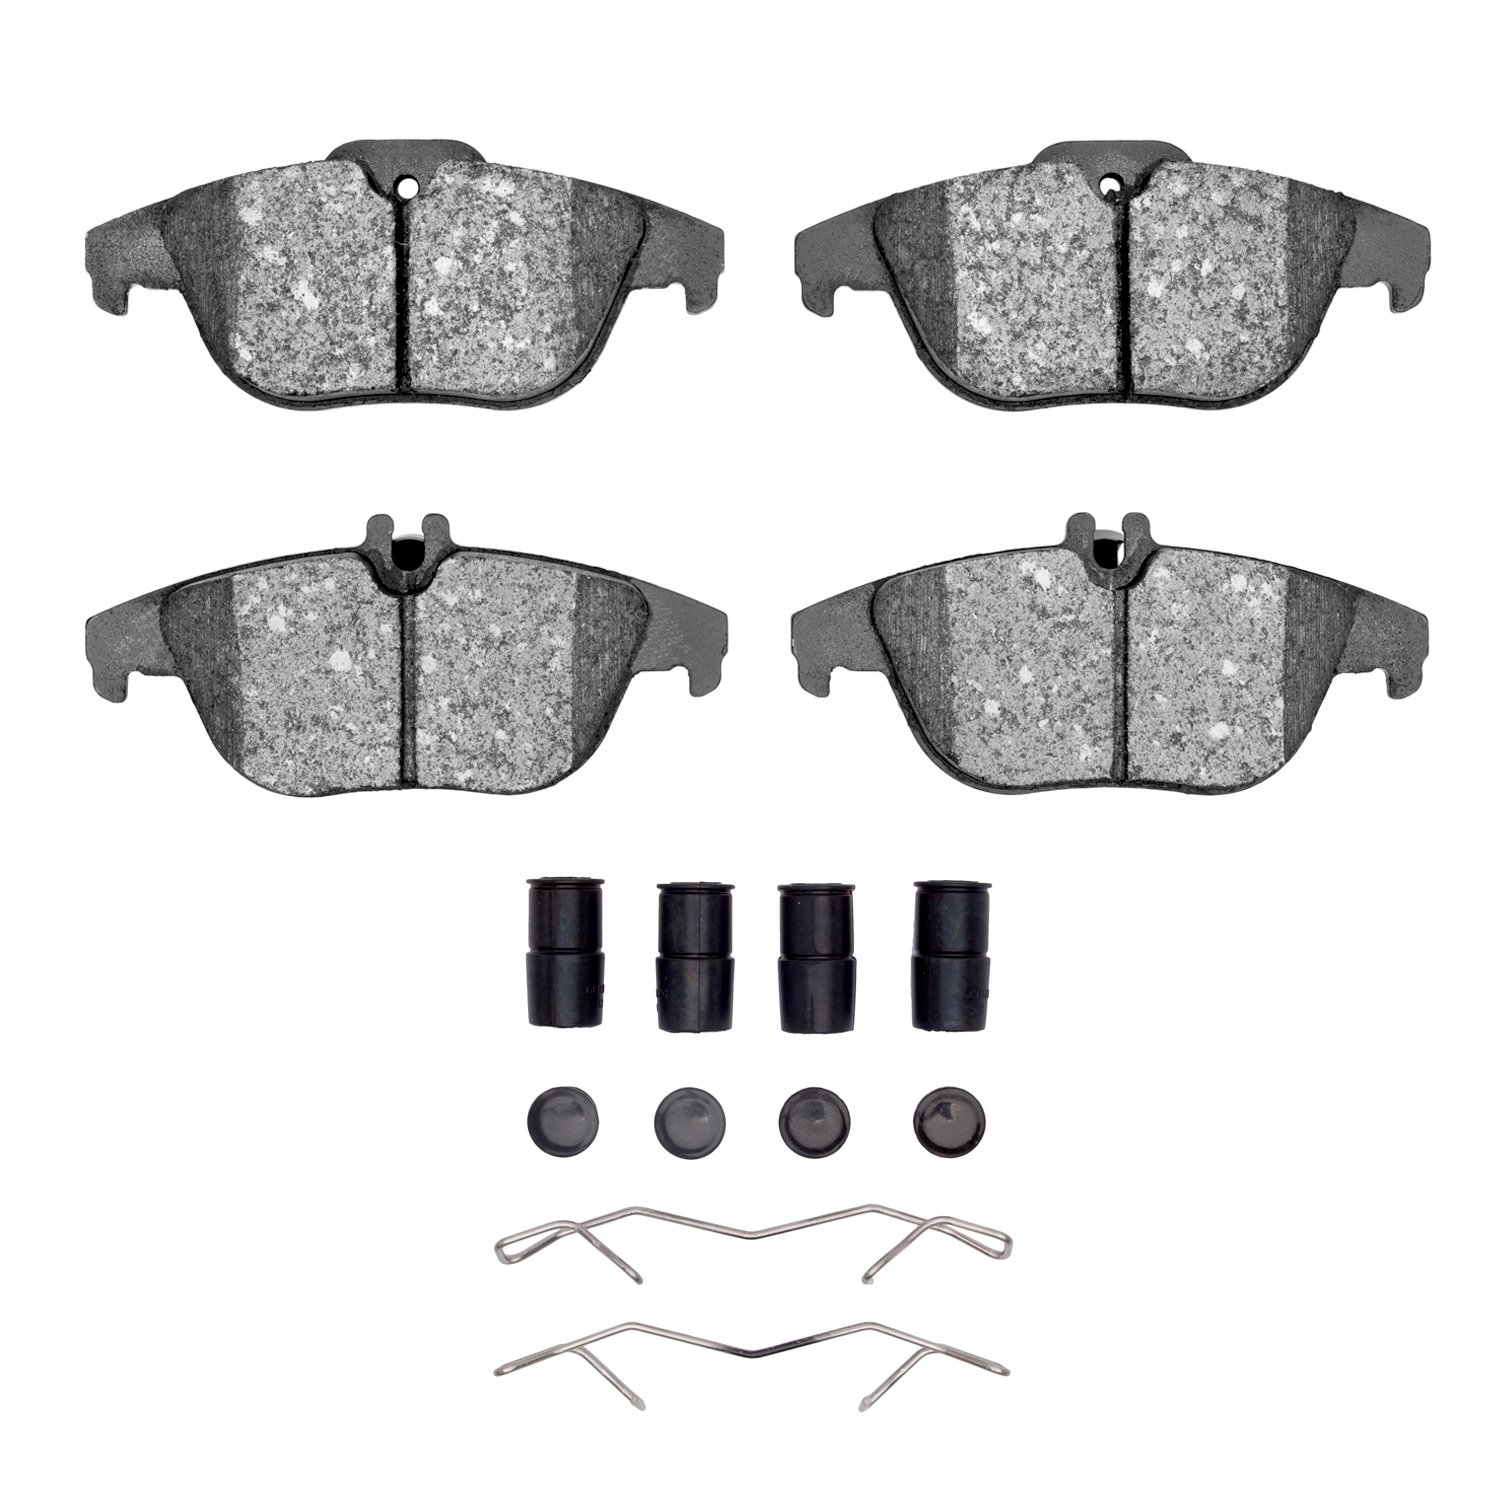 1552-1341-01 5000 Advanced Low-Metallic Brake Pads & Hardware Kit, 2008-2015 Mercedes-Benz, Position: Rear